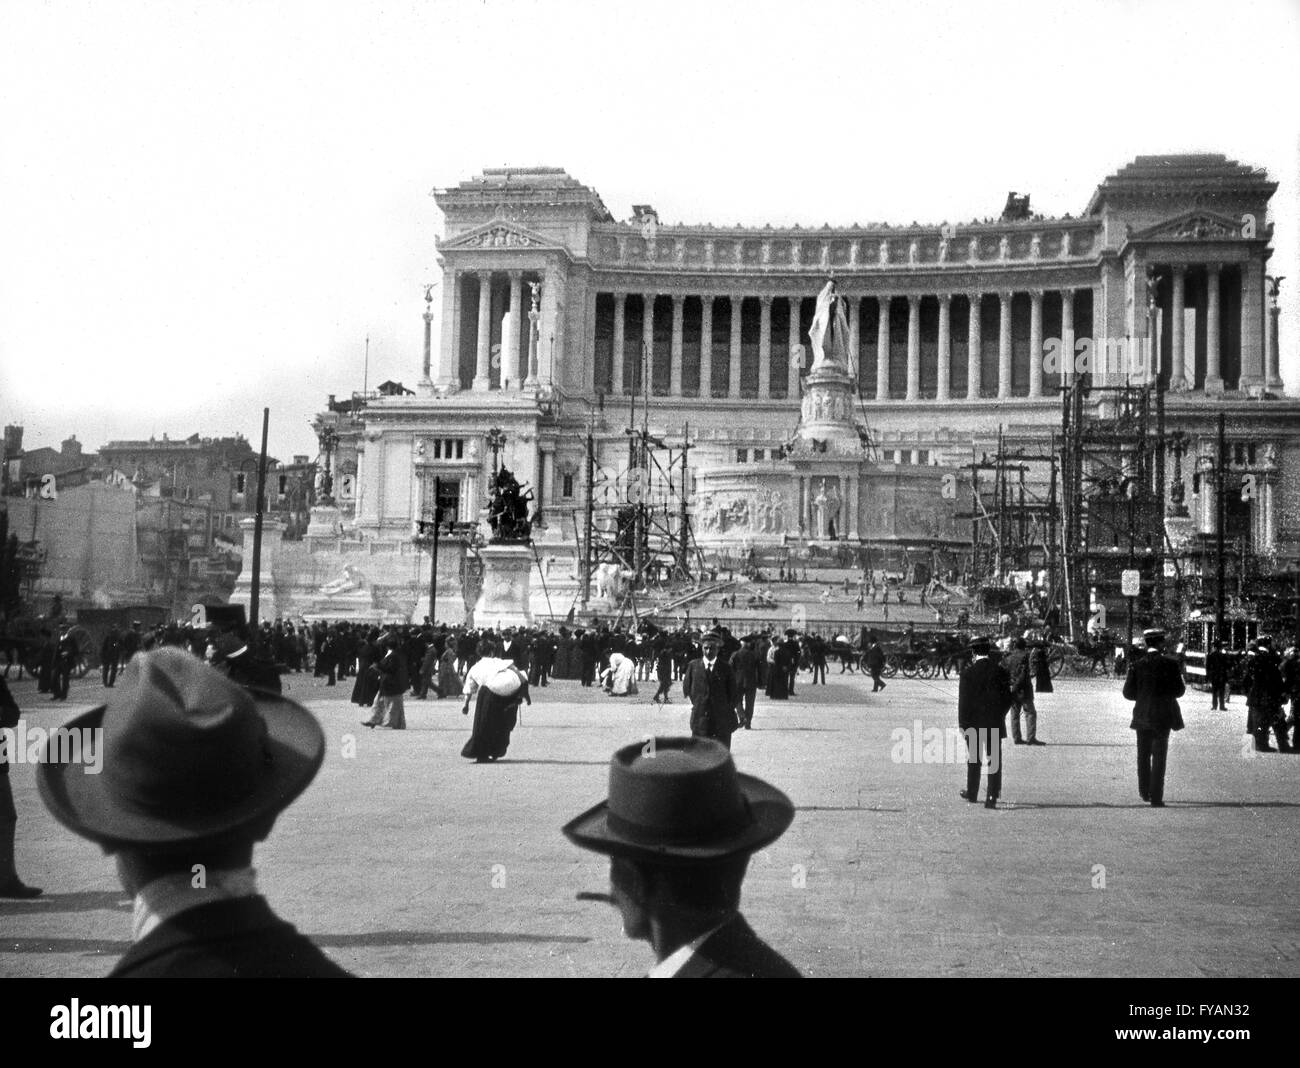 Vittorio Emanuele II monument under construction in Piazza Venezia, Rome, Italy 1922 Stock Photo